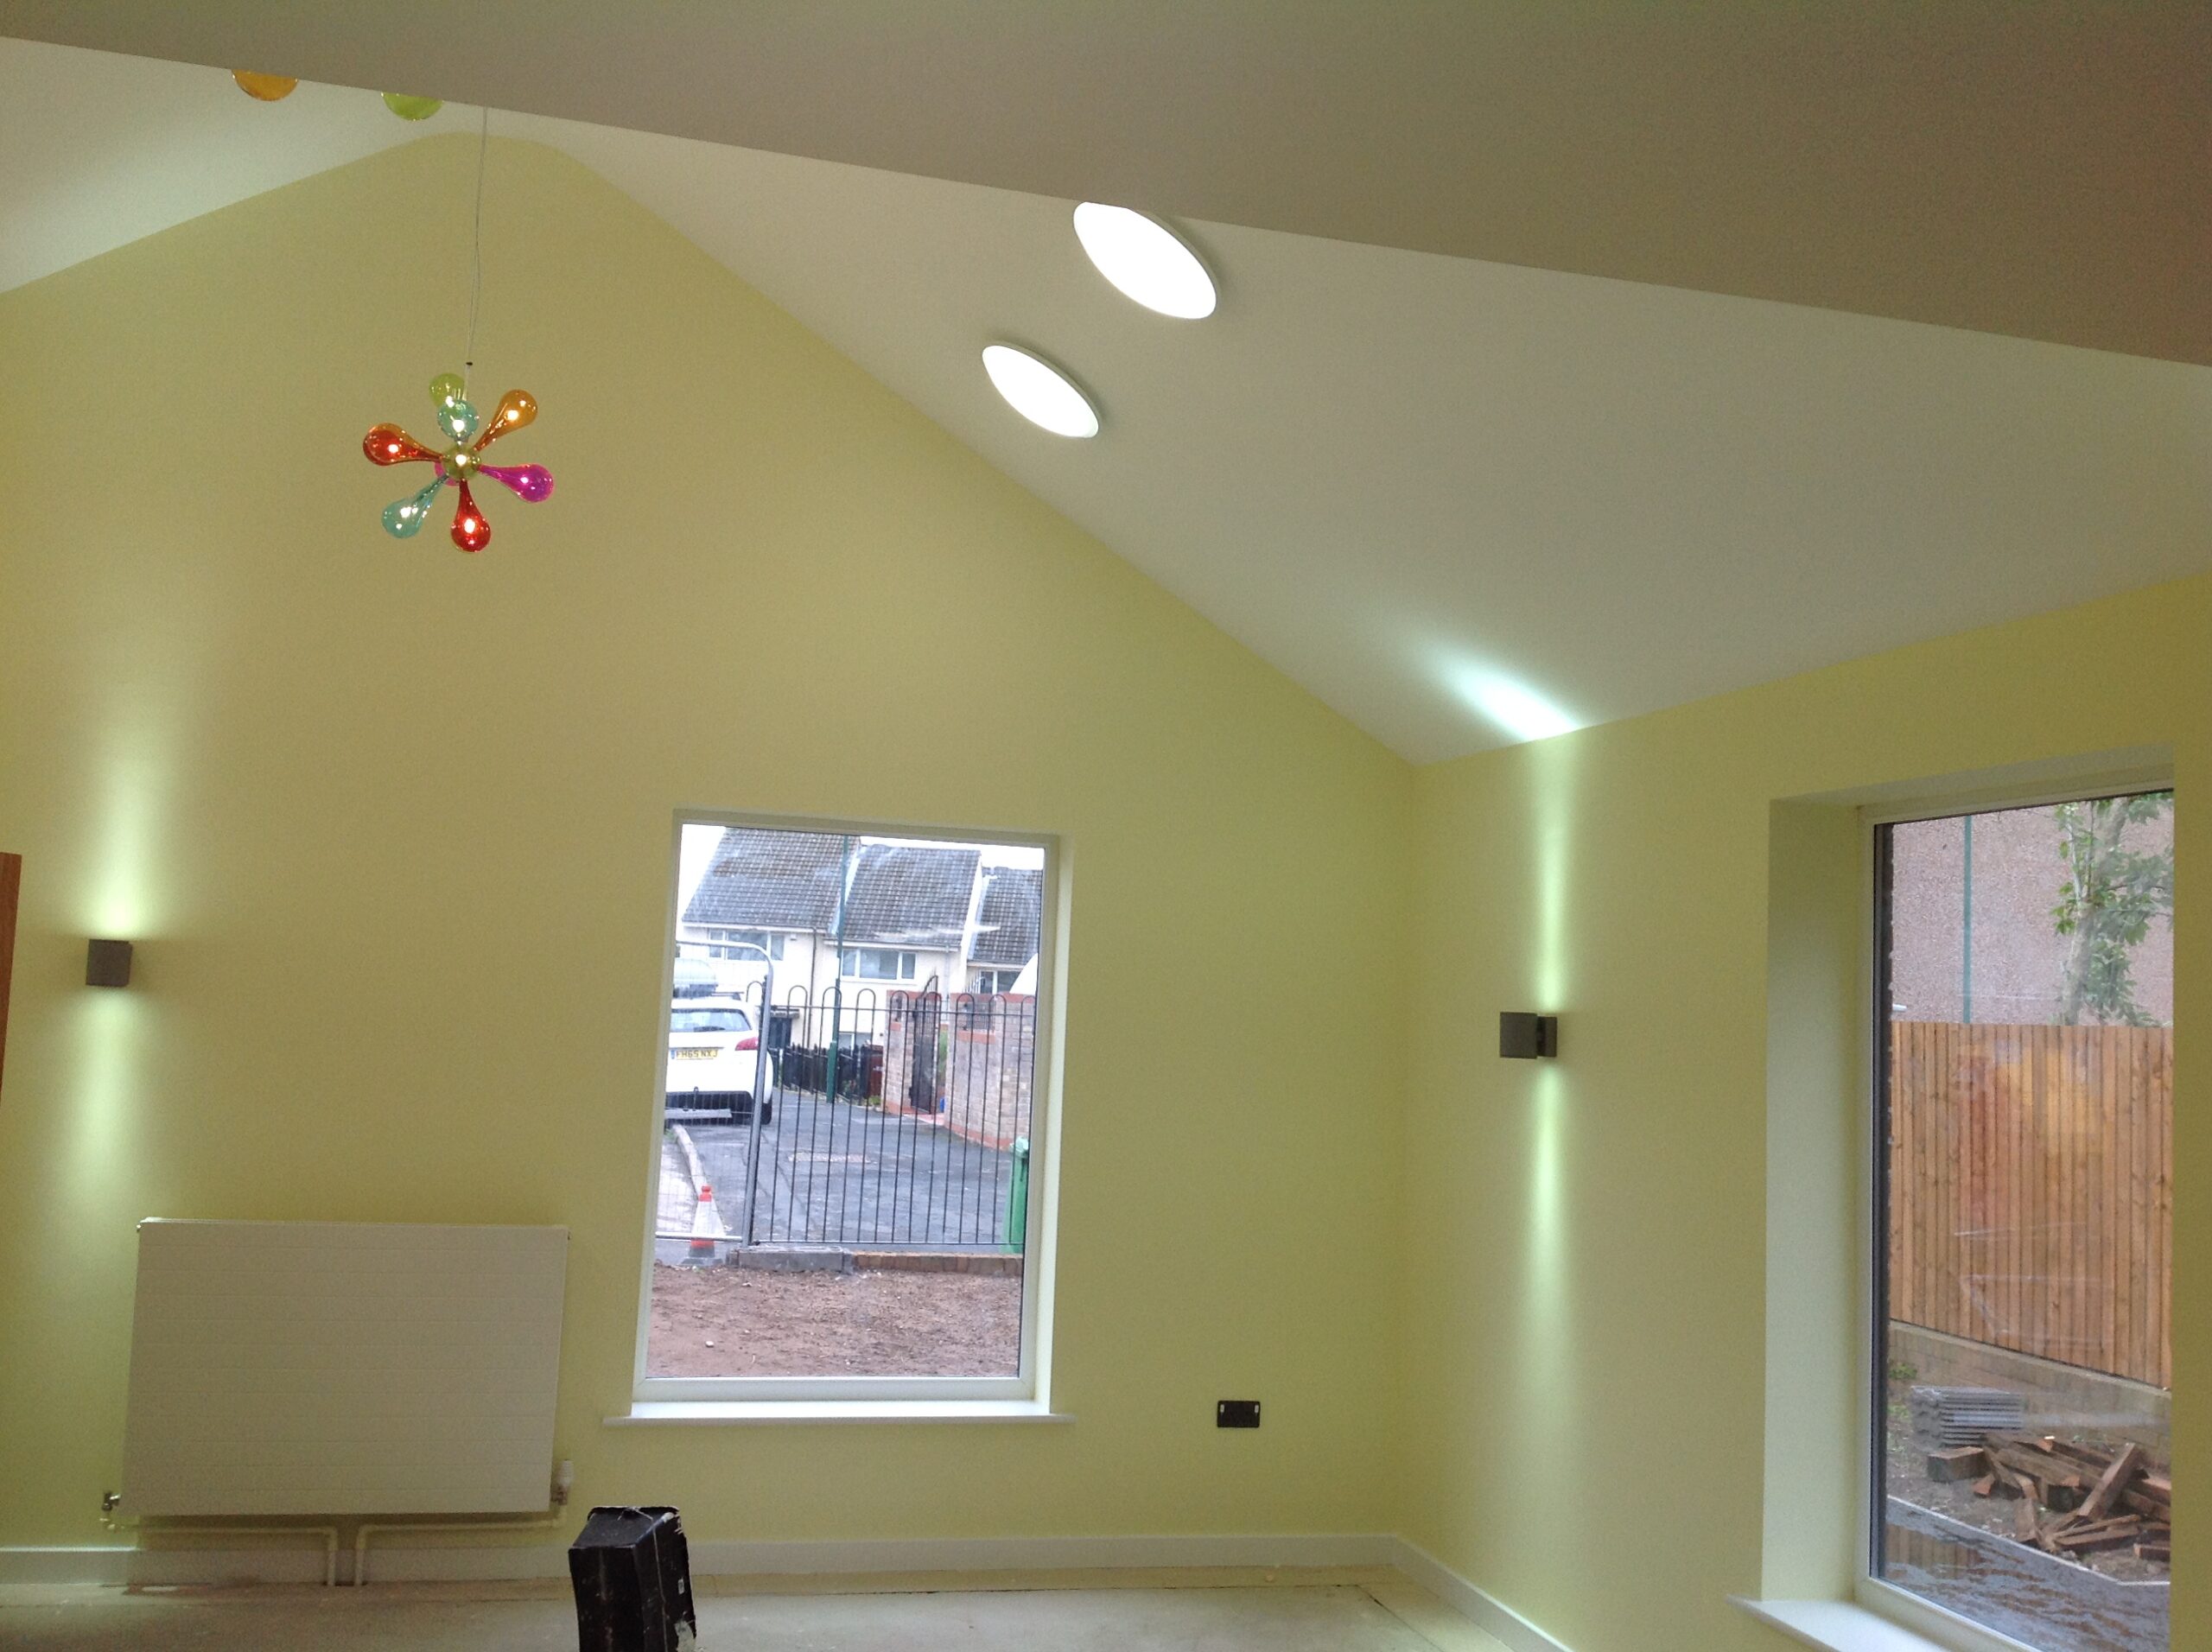 Tamlite Nottingham Living Independent interior LED lighting